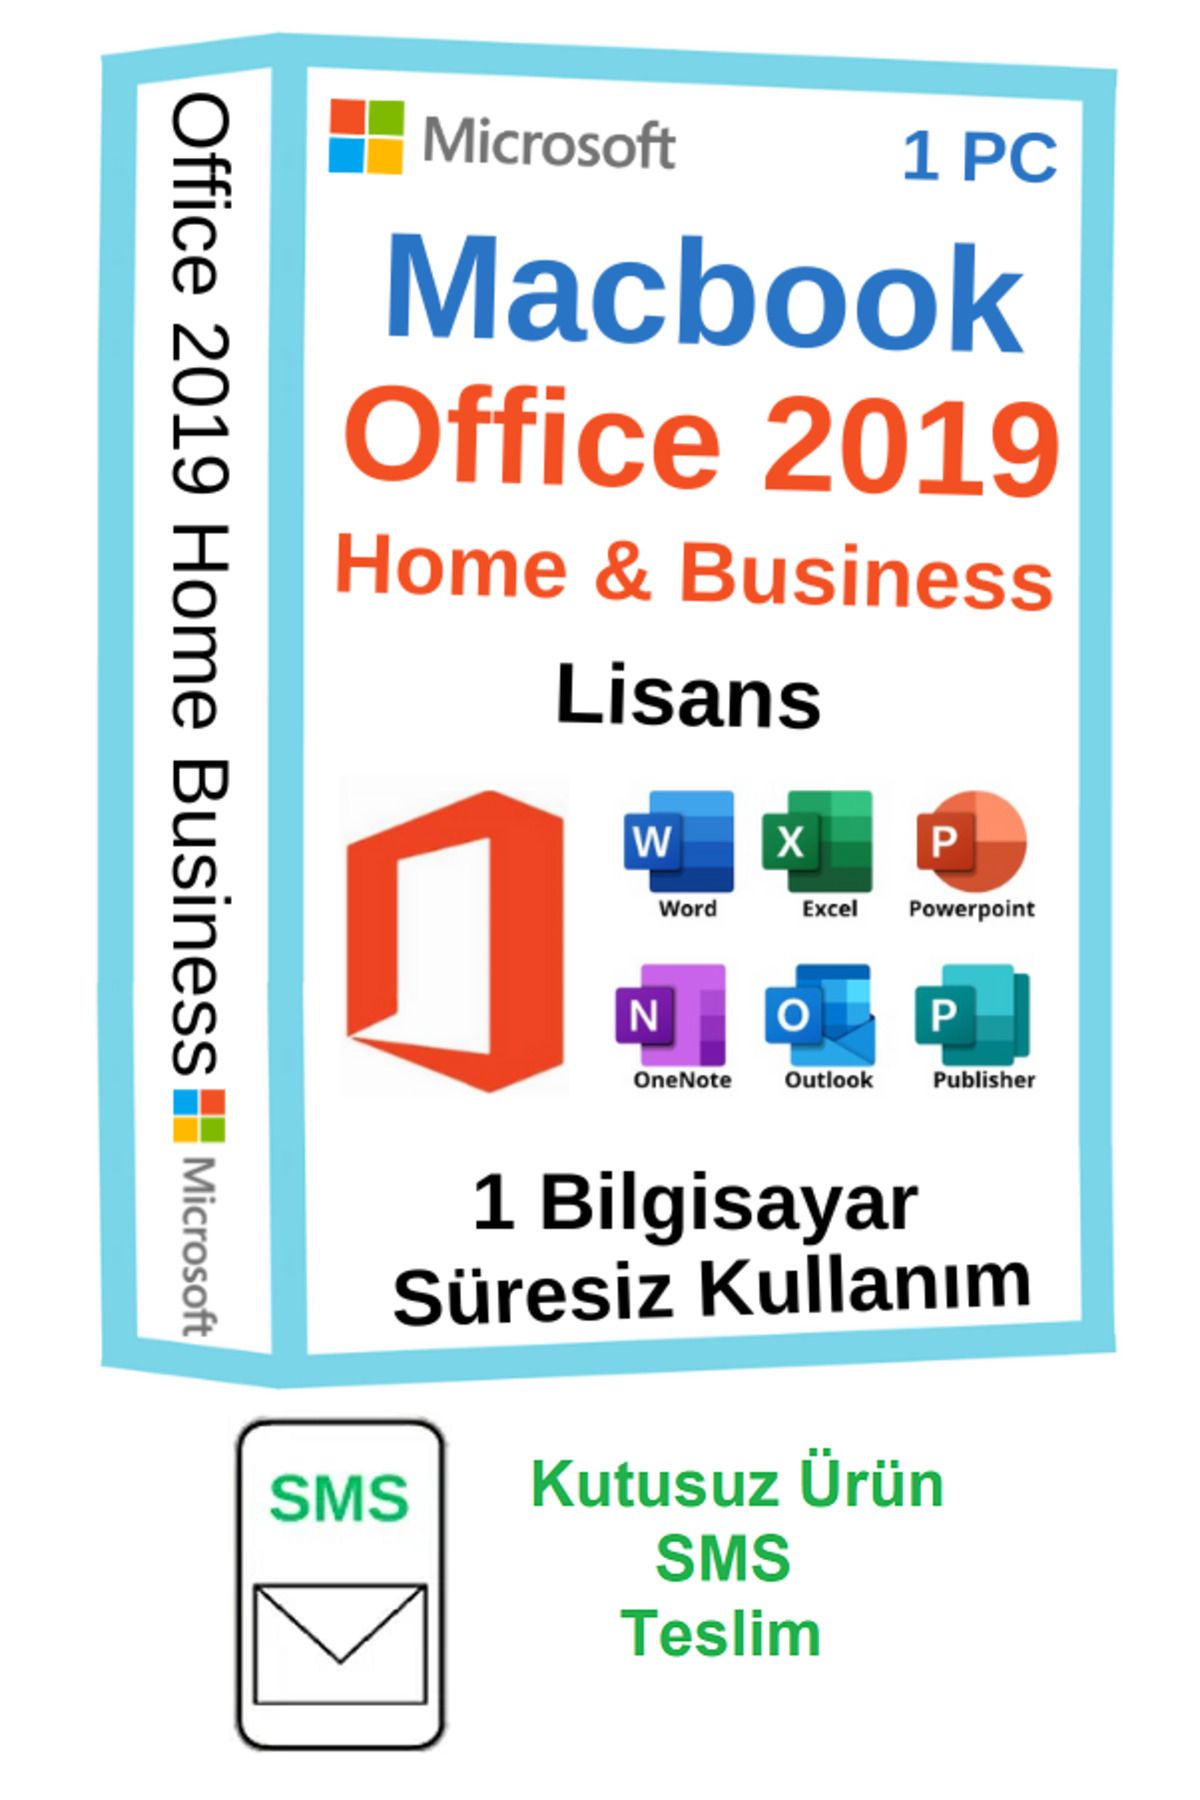 Microsoft Macbook - Office 2019 Home Business Lisans - 1 PC - Süresiz- SMS Teslimat